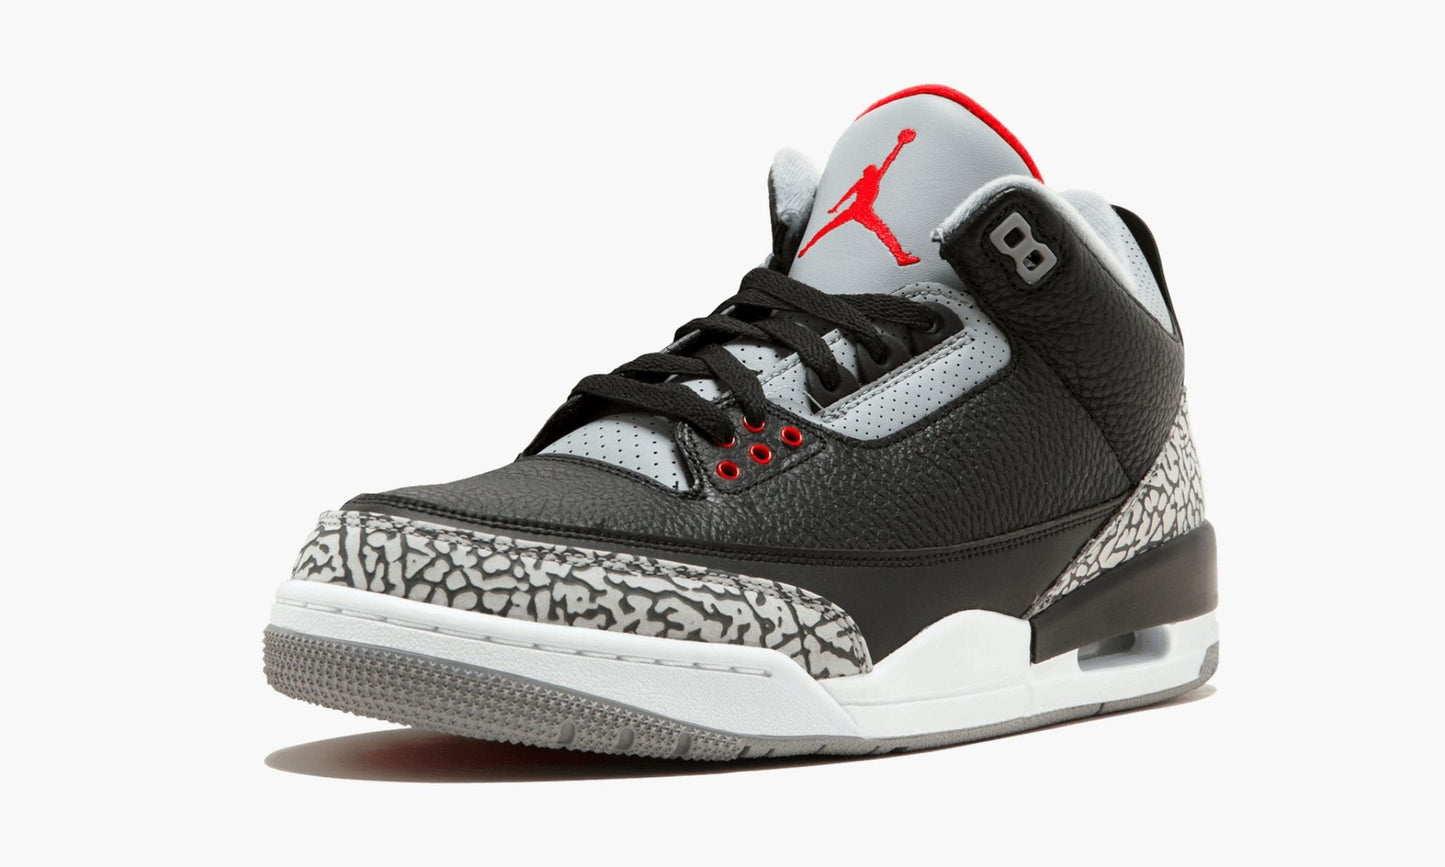 Air Jordan 3 Retro OG "Black/Cement"